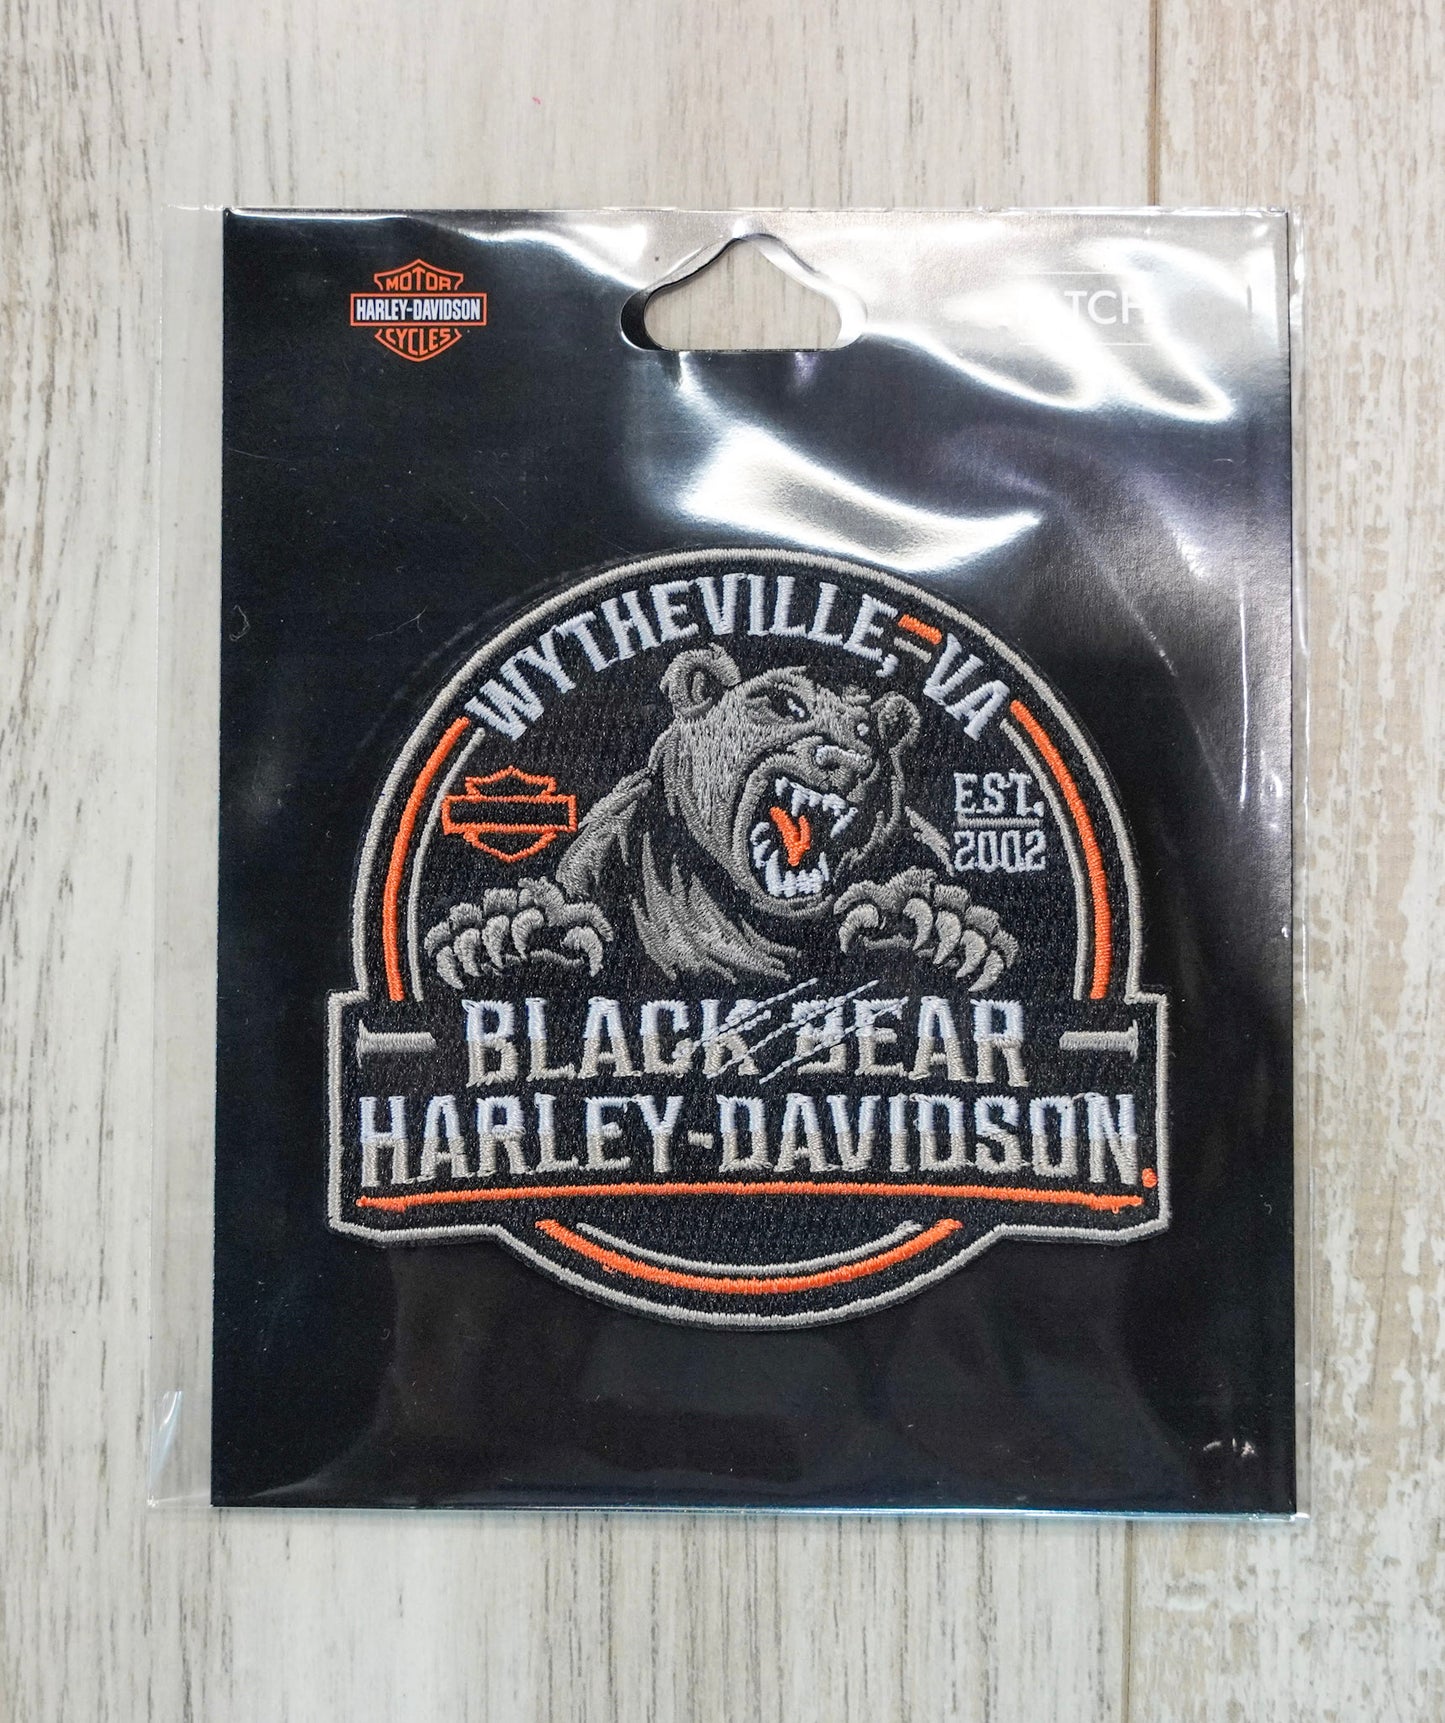 Black Bear Harley-Davidson Patch